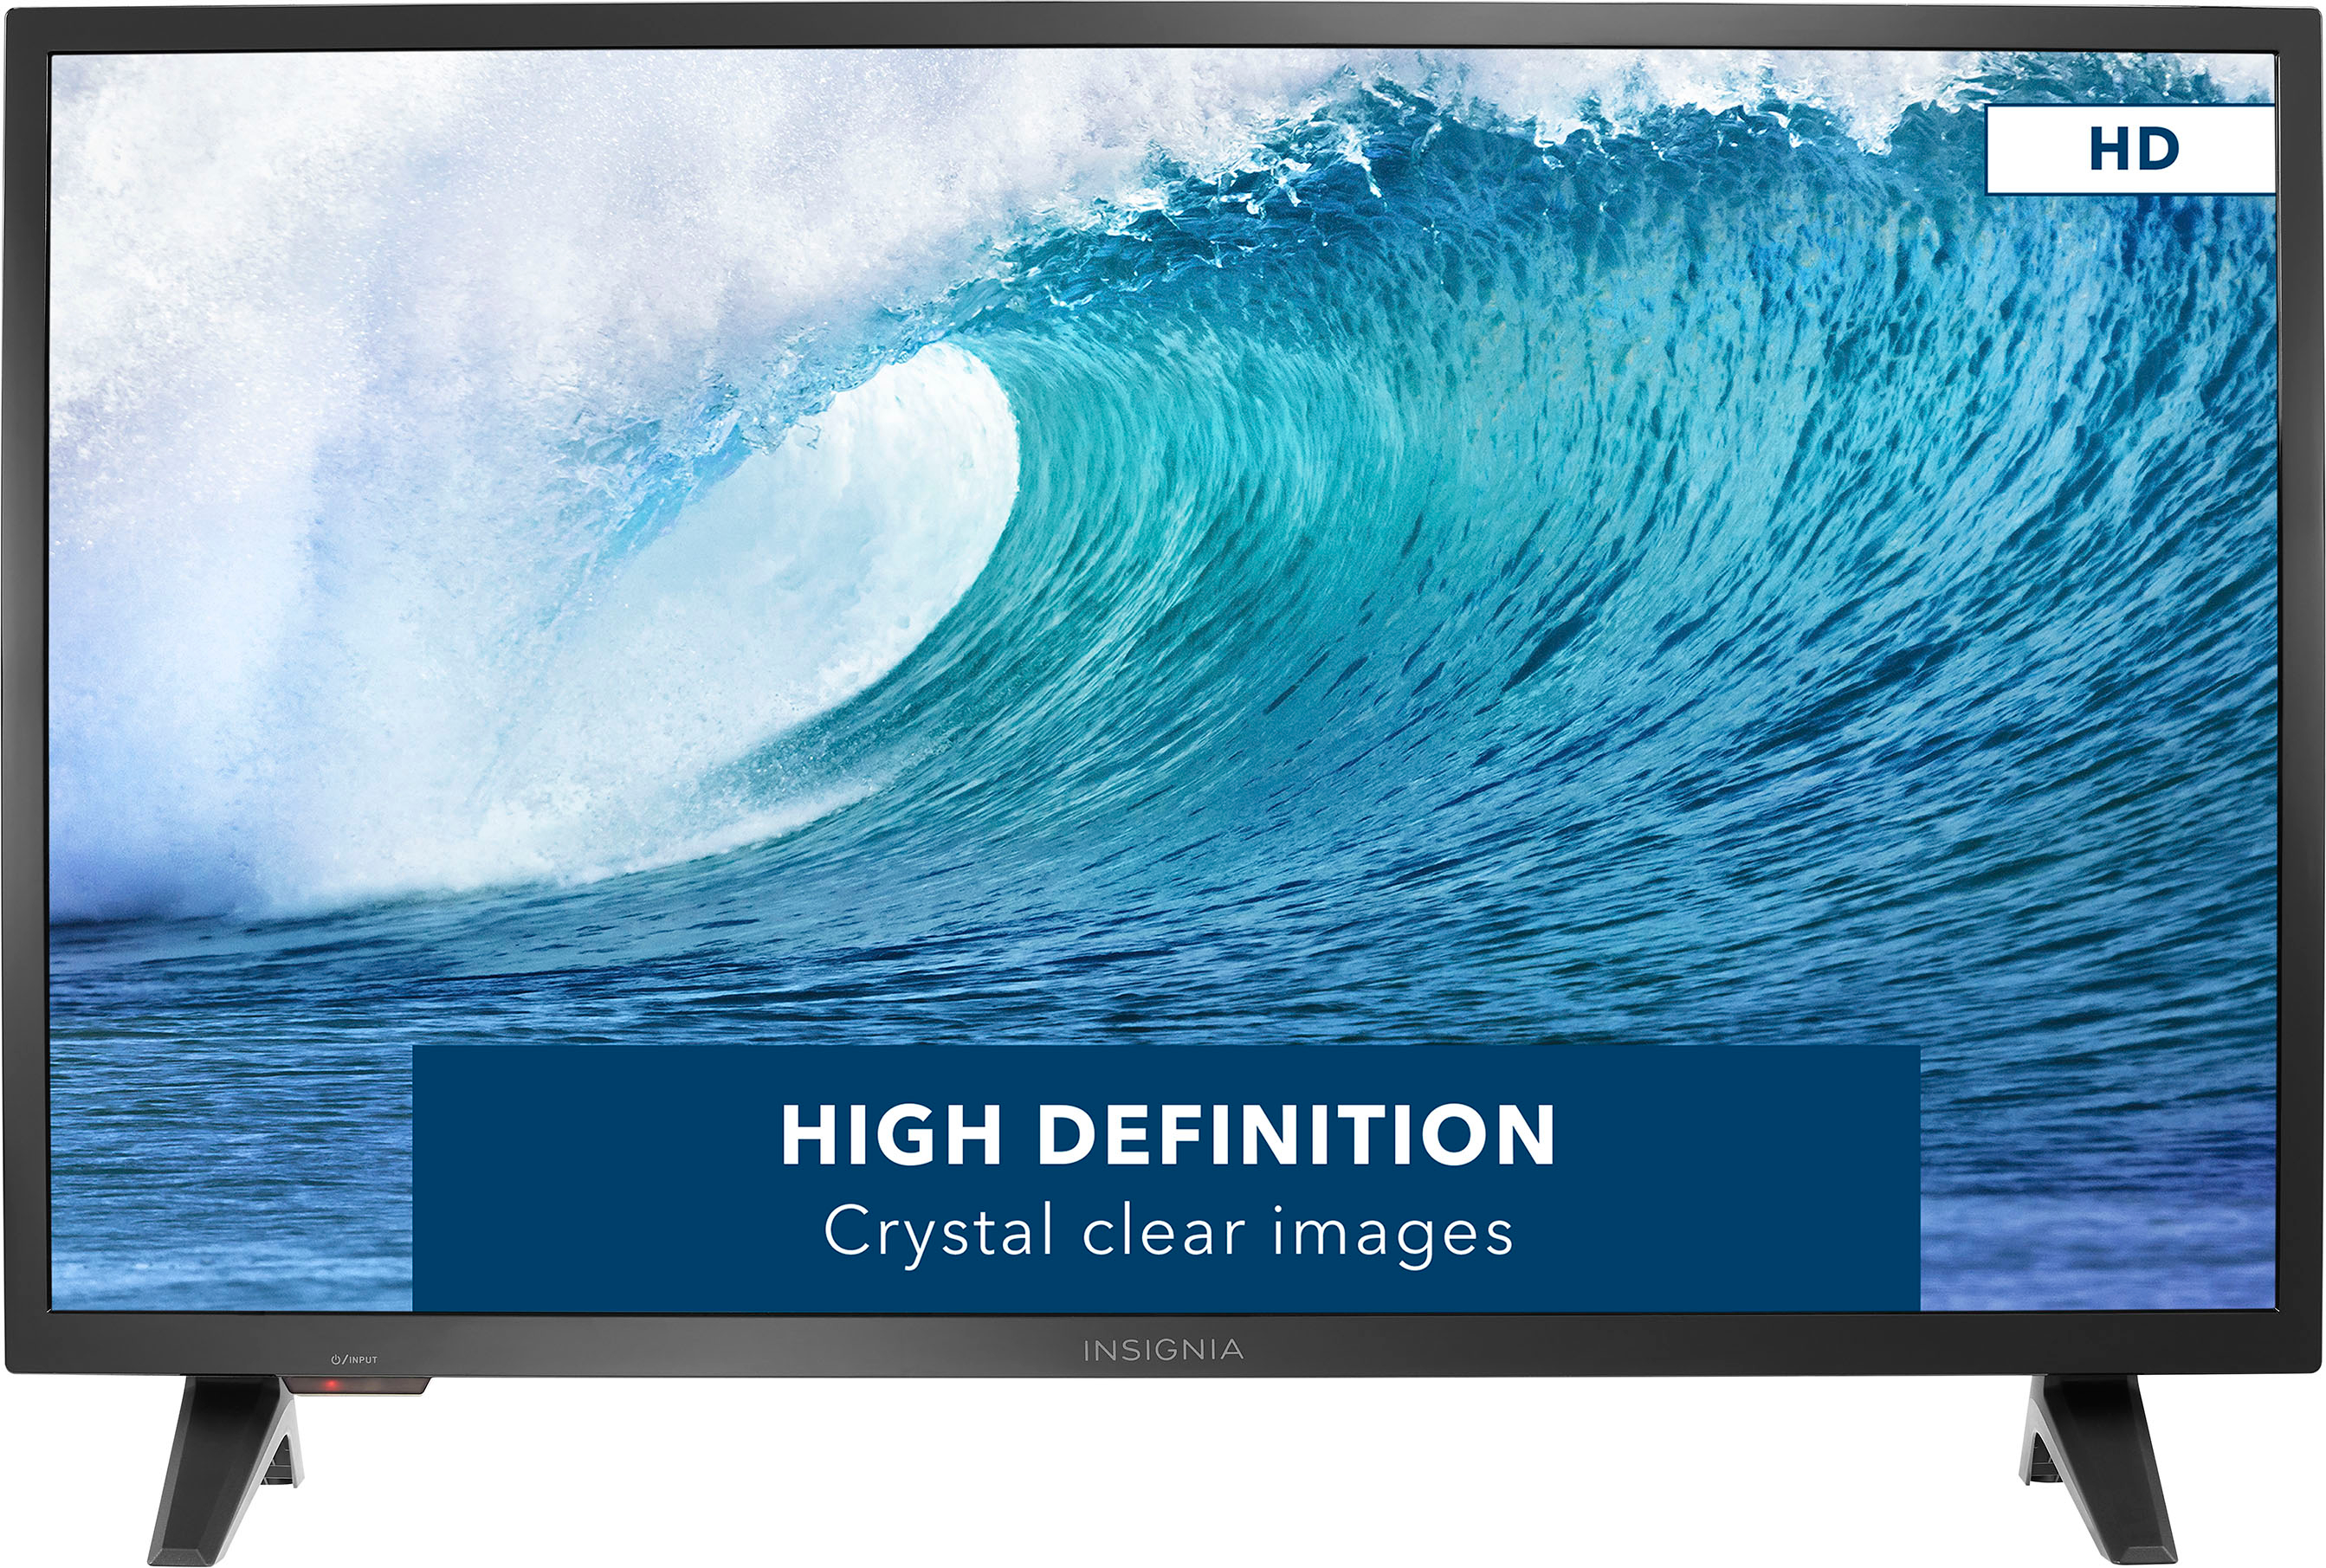 INSIGNIA 32-inch Class F20 Series Smart HD 720p Fire TV with Alexa Voice  Remote (NS-32F201NA23, 2022 Model)